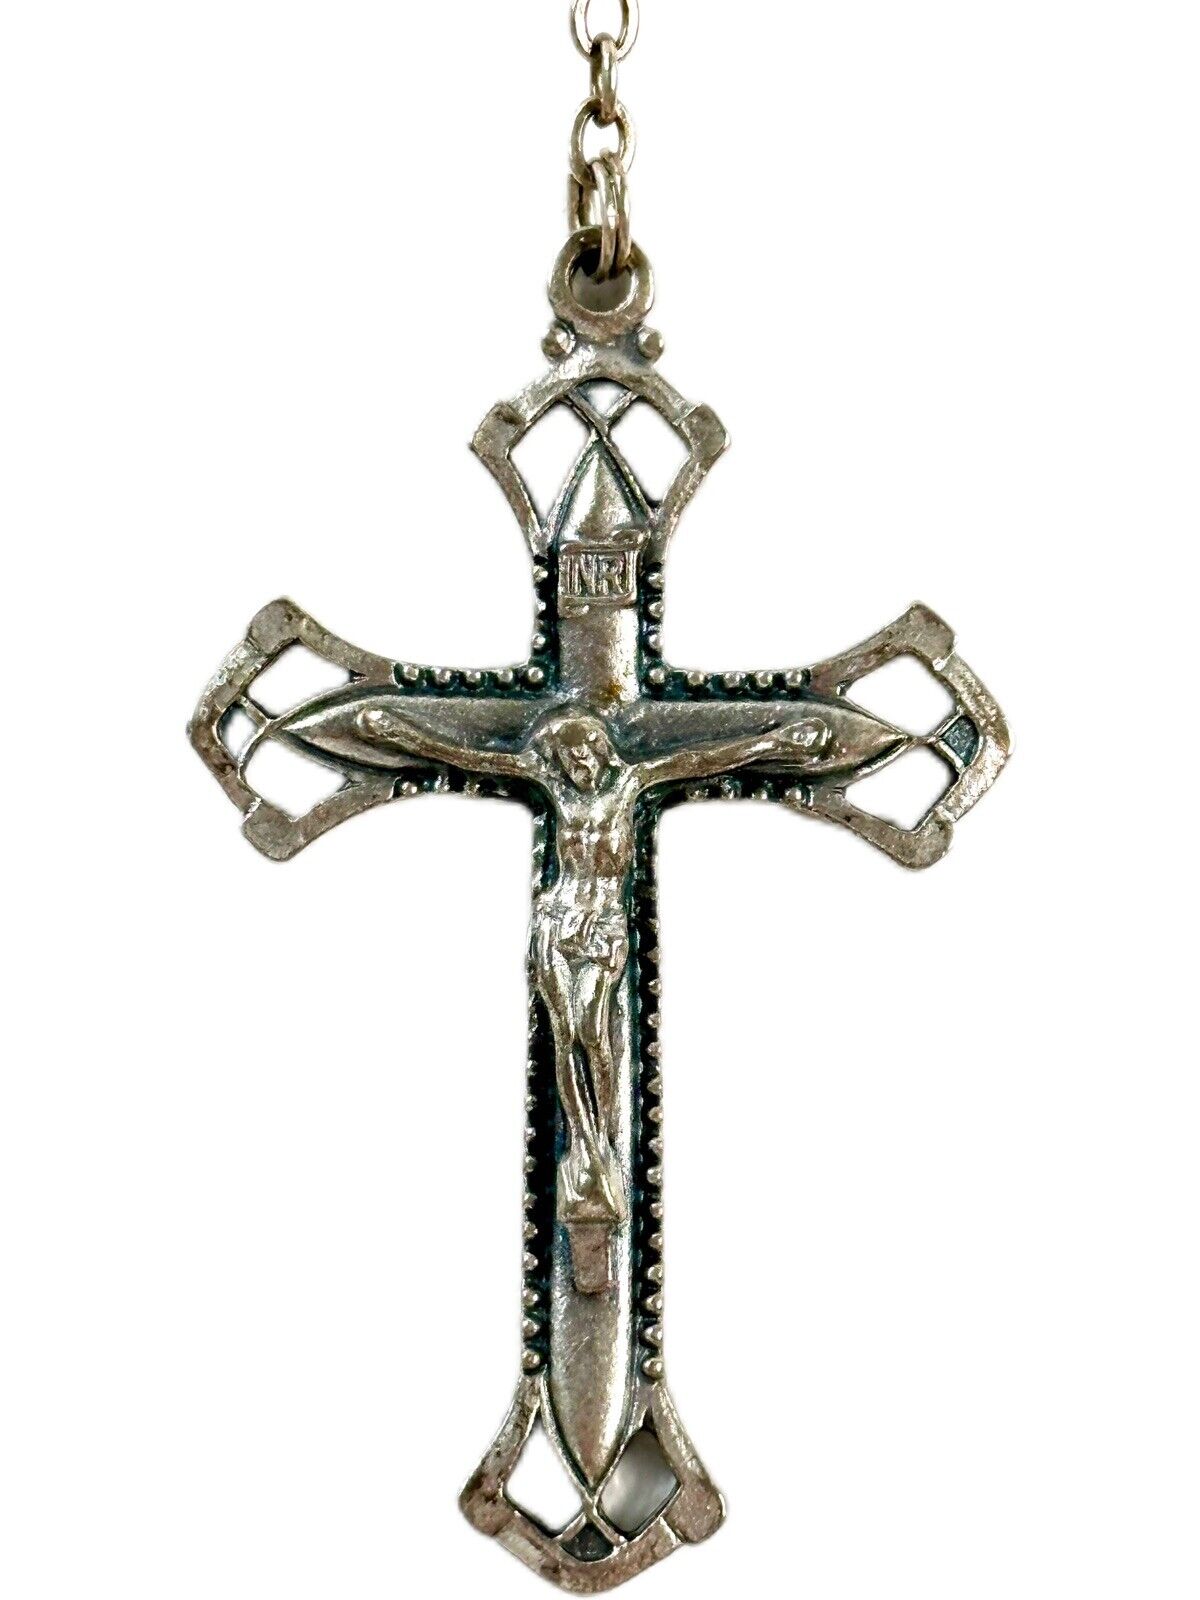 Vintage Italian Religious Rosary Roman Catholic Silver Tone Glass Beads Crucifix